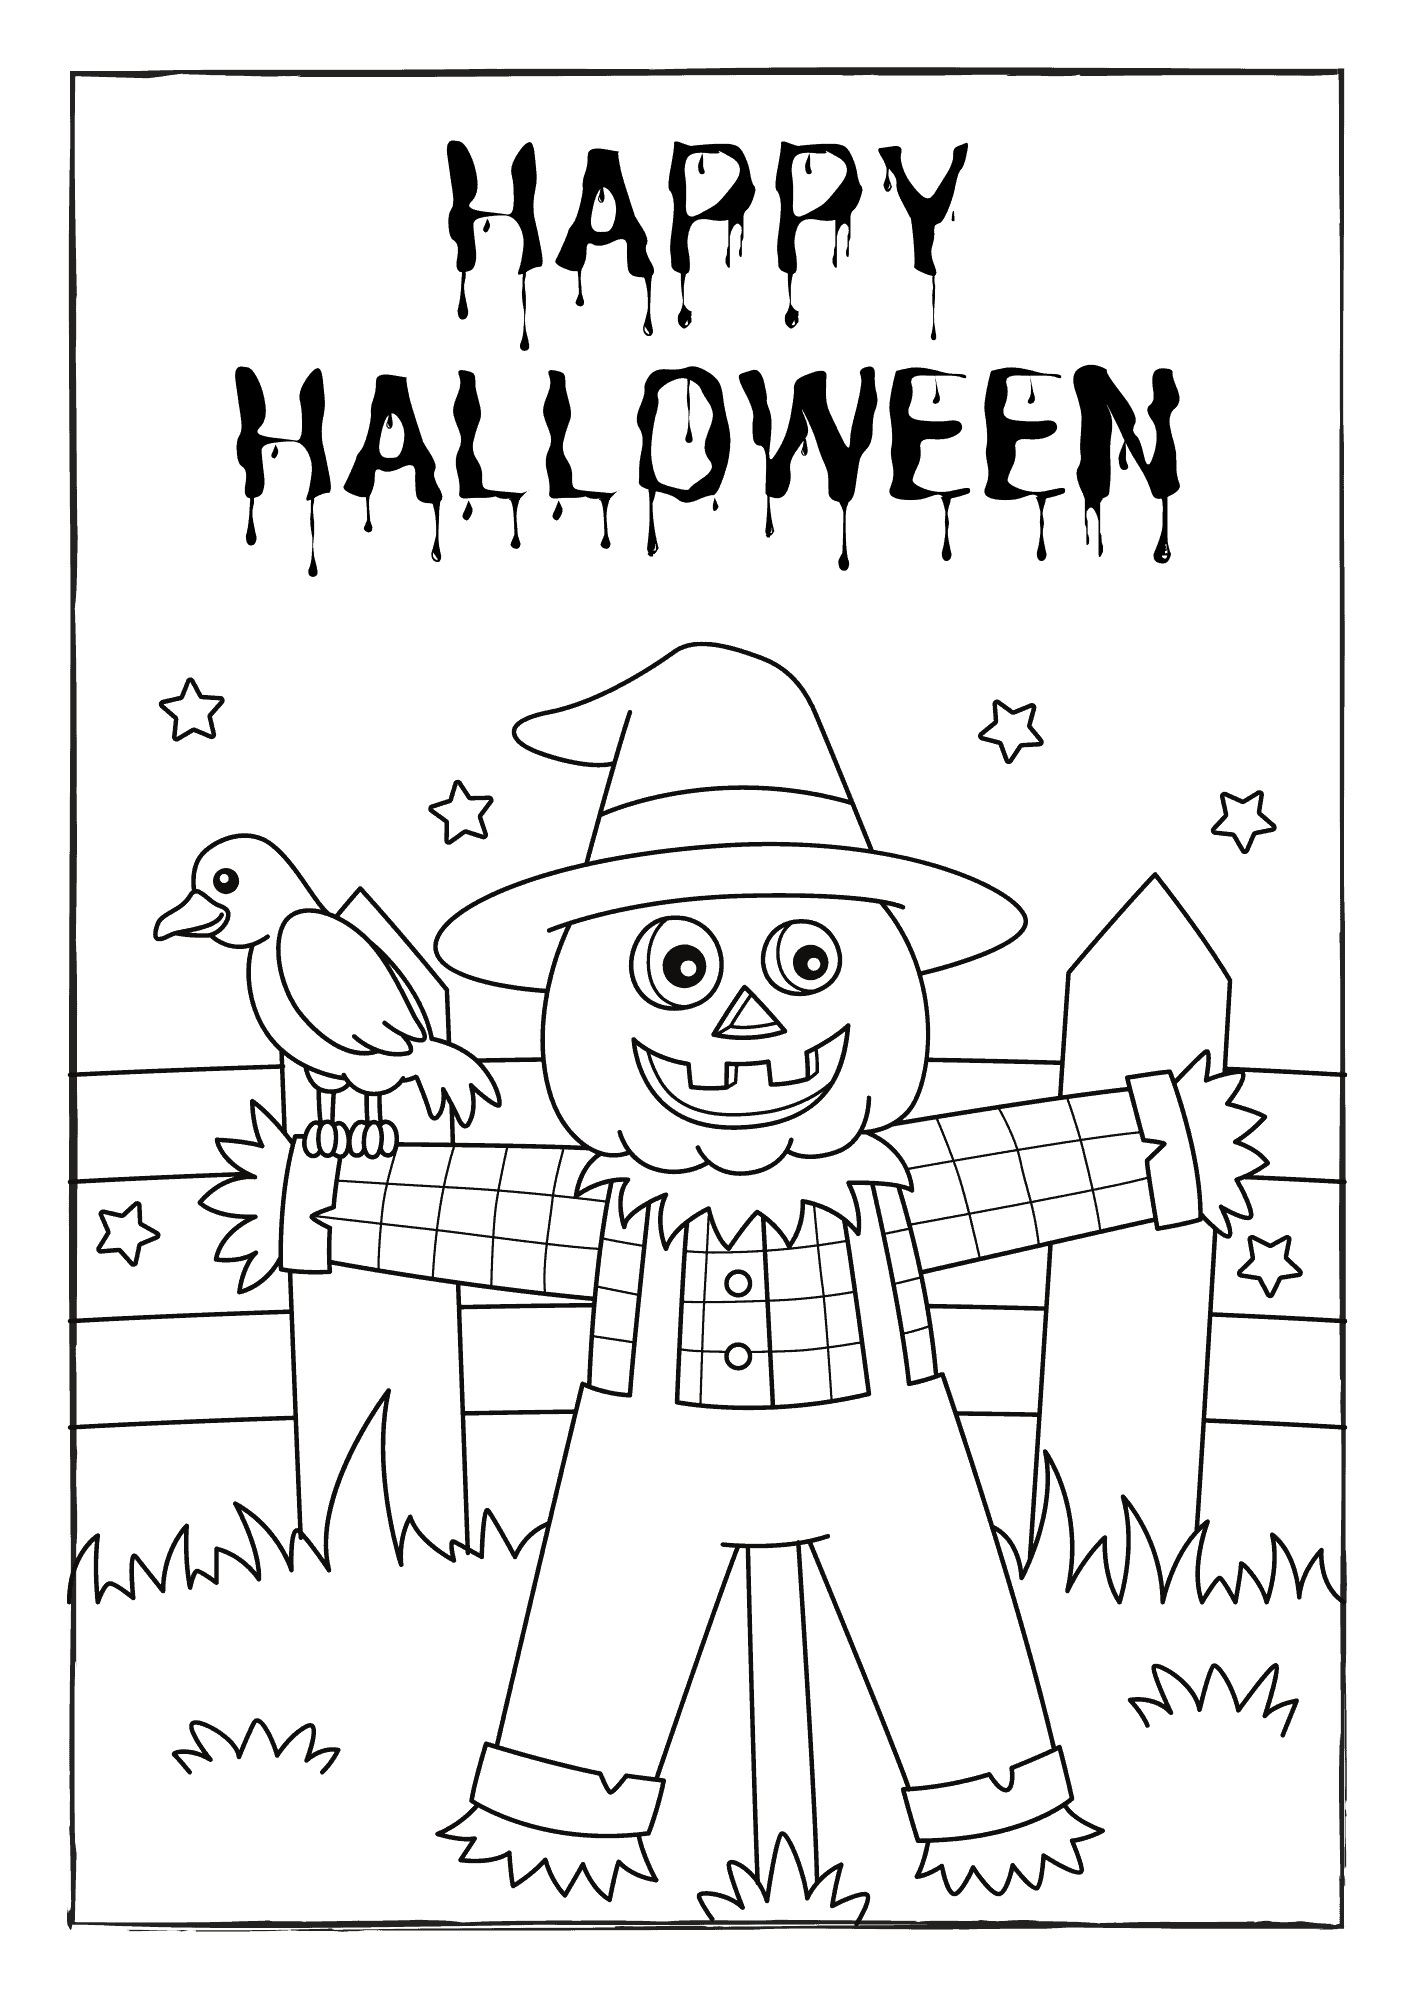 Easy Halloween Coloring Sheet